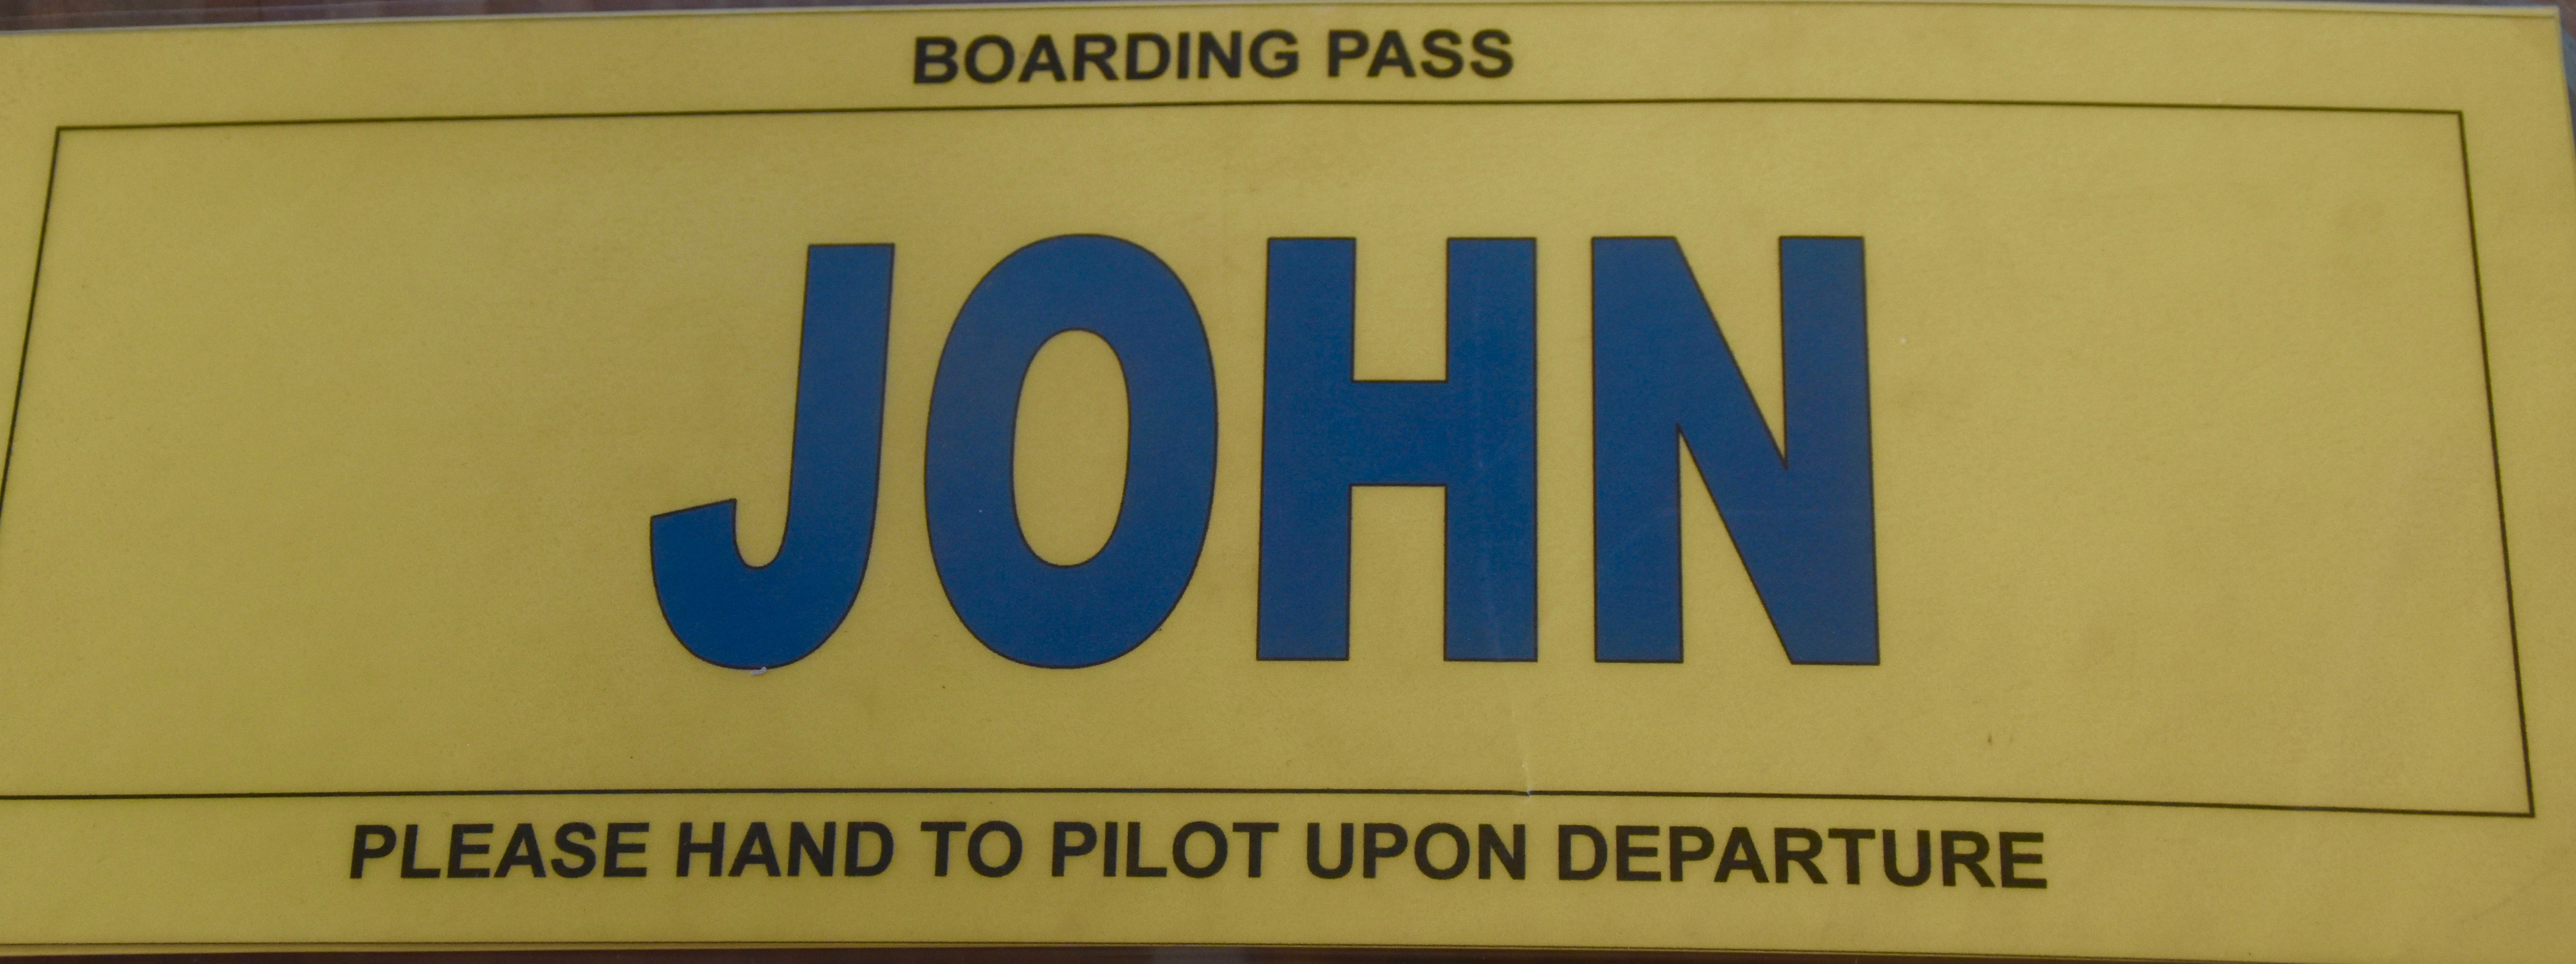 Boarding Pass for the John's